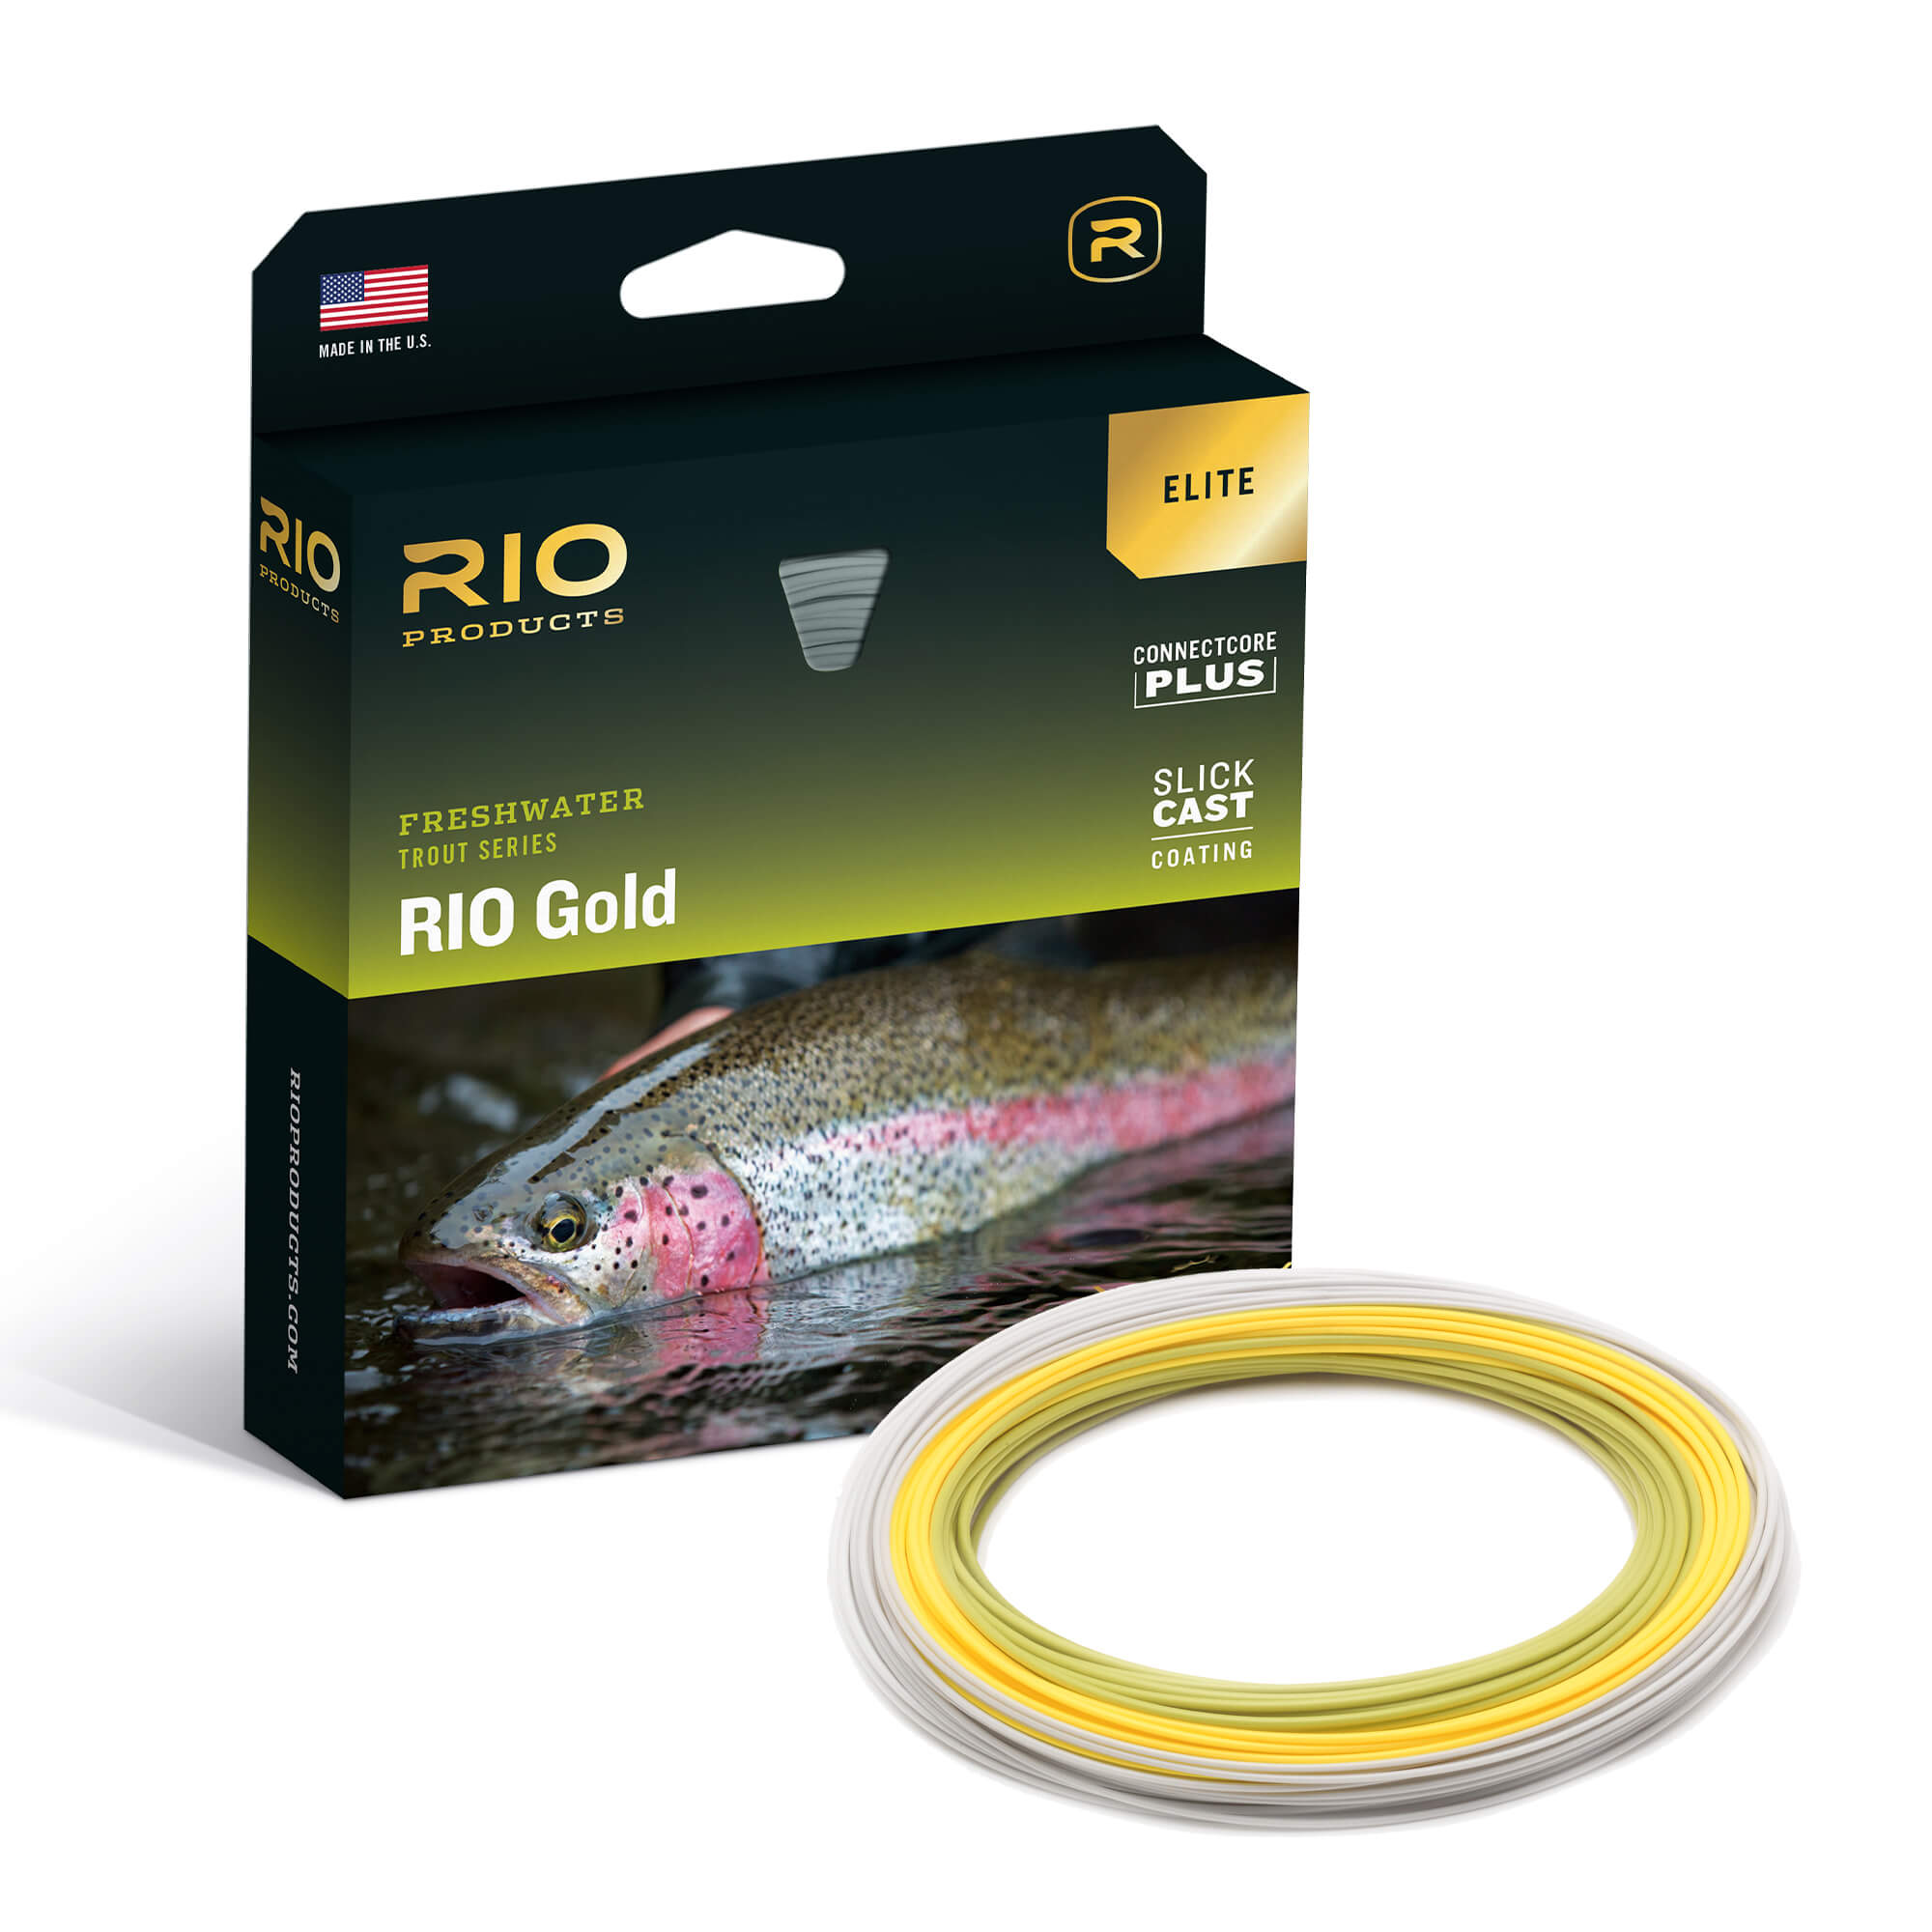 Elite RIO Gold Fly Line – Guide Flyfishing, Fly Fishing Rods, Reels, Sage, Redington, RIO